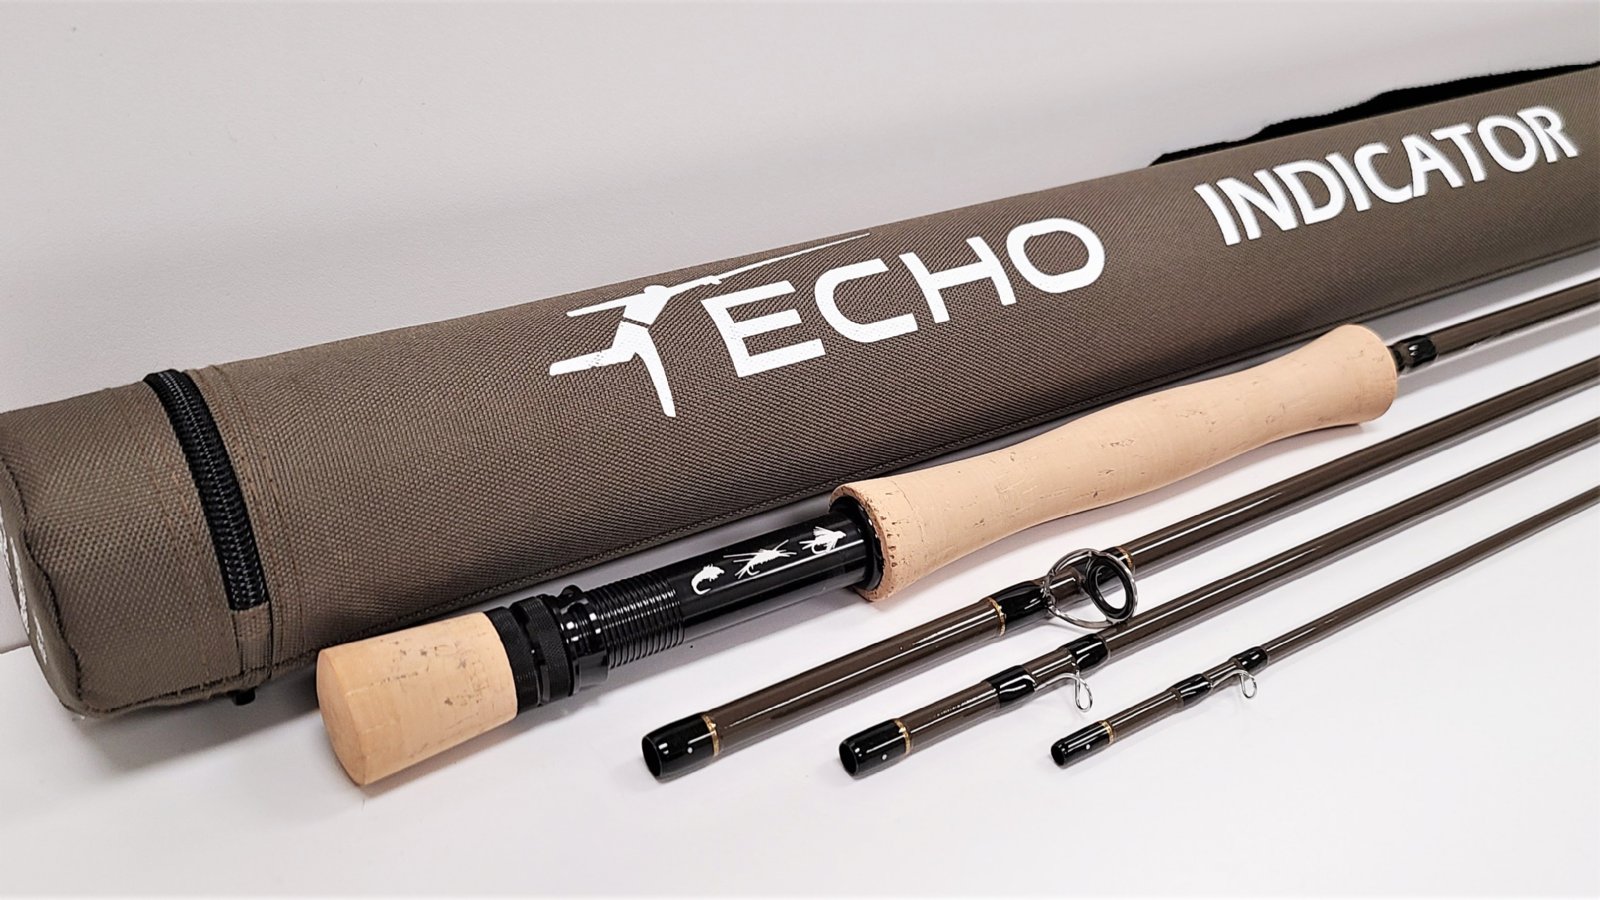 Echo Indicator Rods - Echo Fly rods